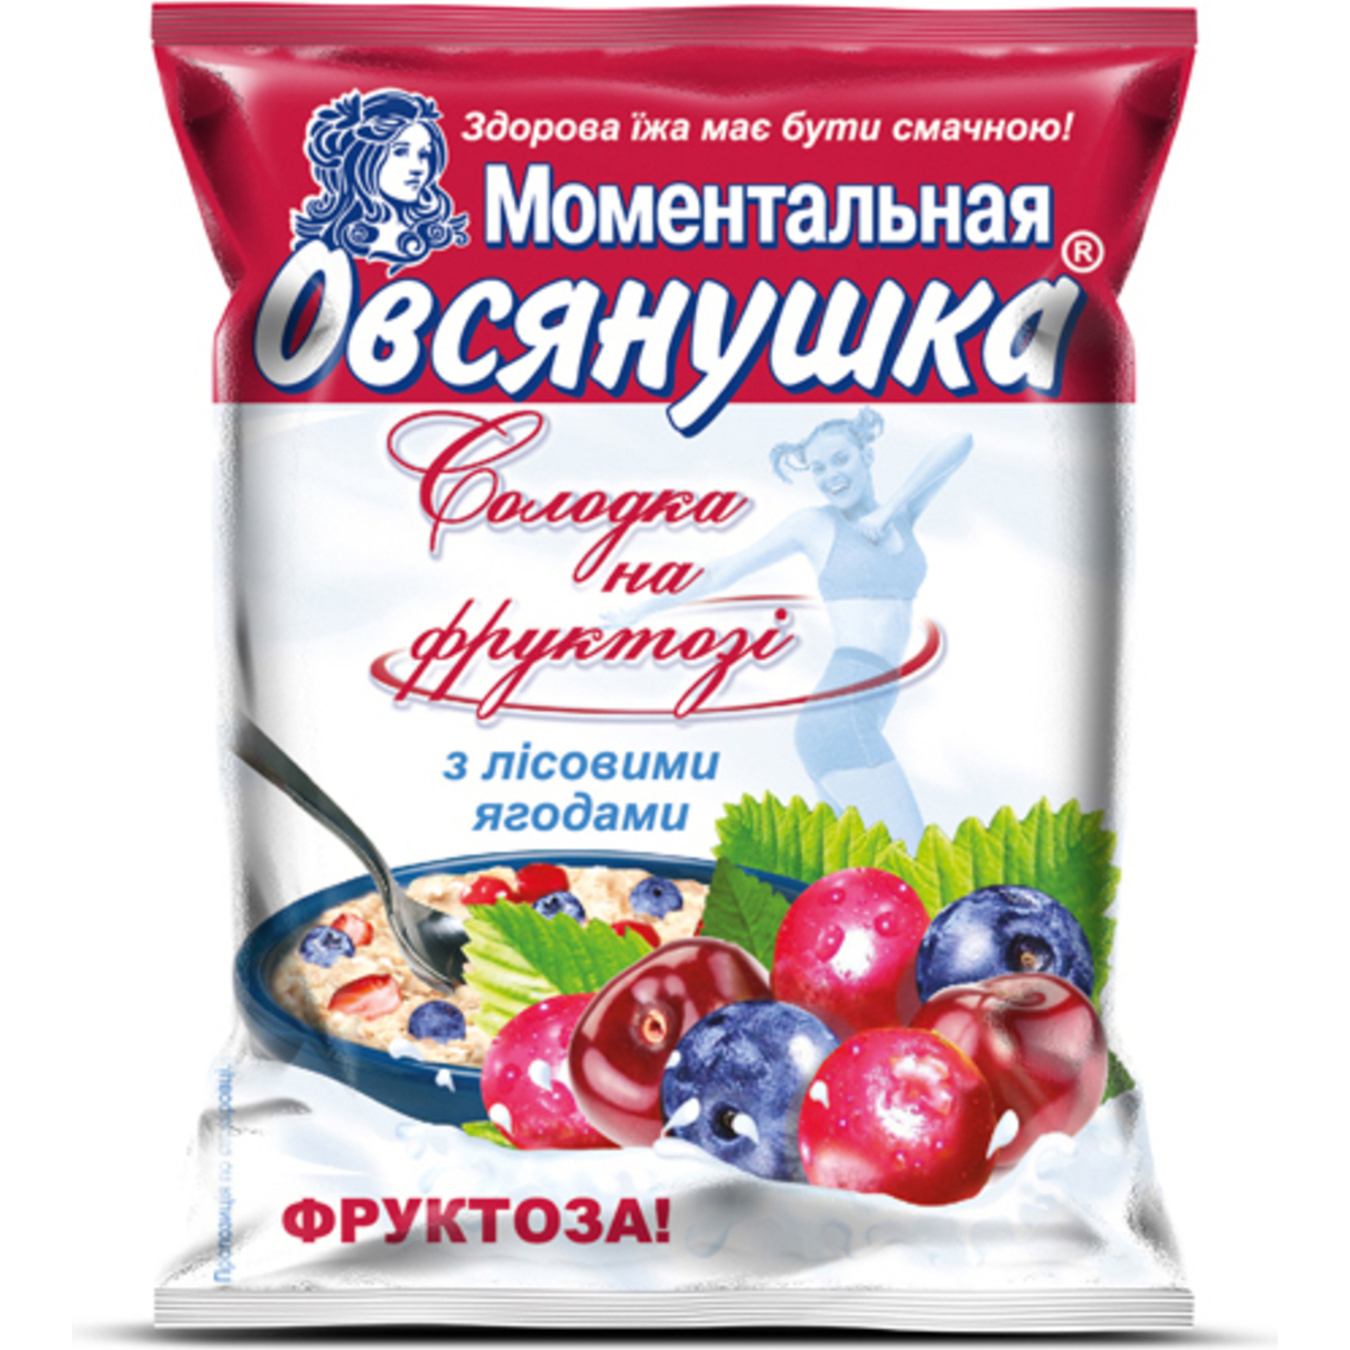 Ovsyanushka Momentalnaya Oatmeal Porridge with Fructose Wild Berries and Cream Quick-cooking 40g